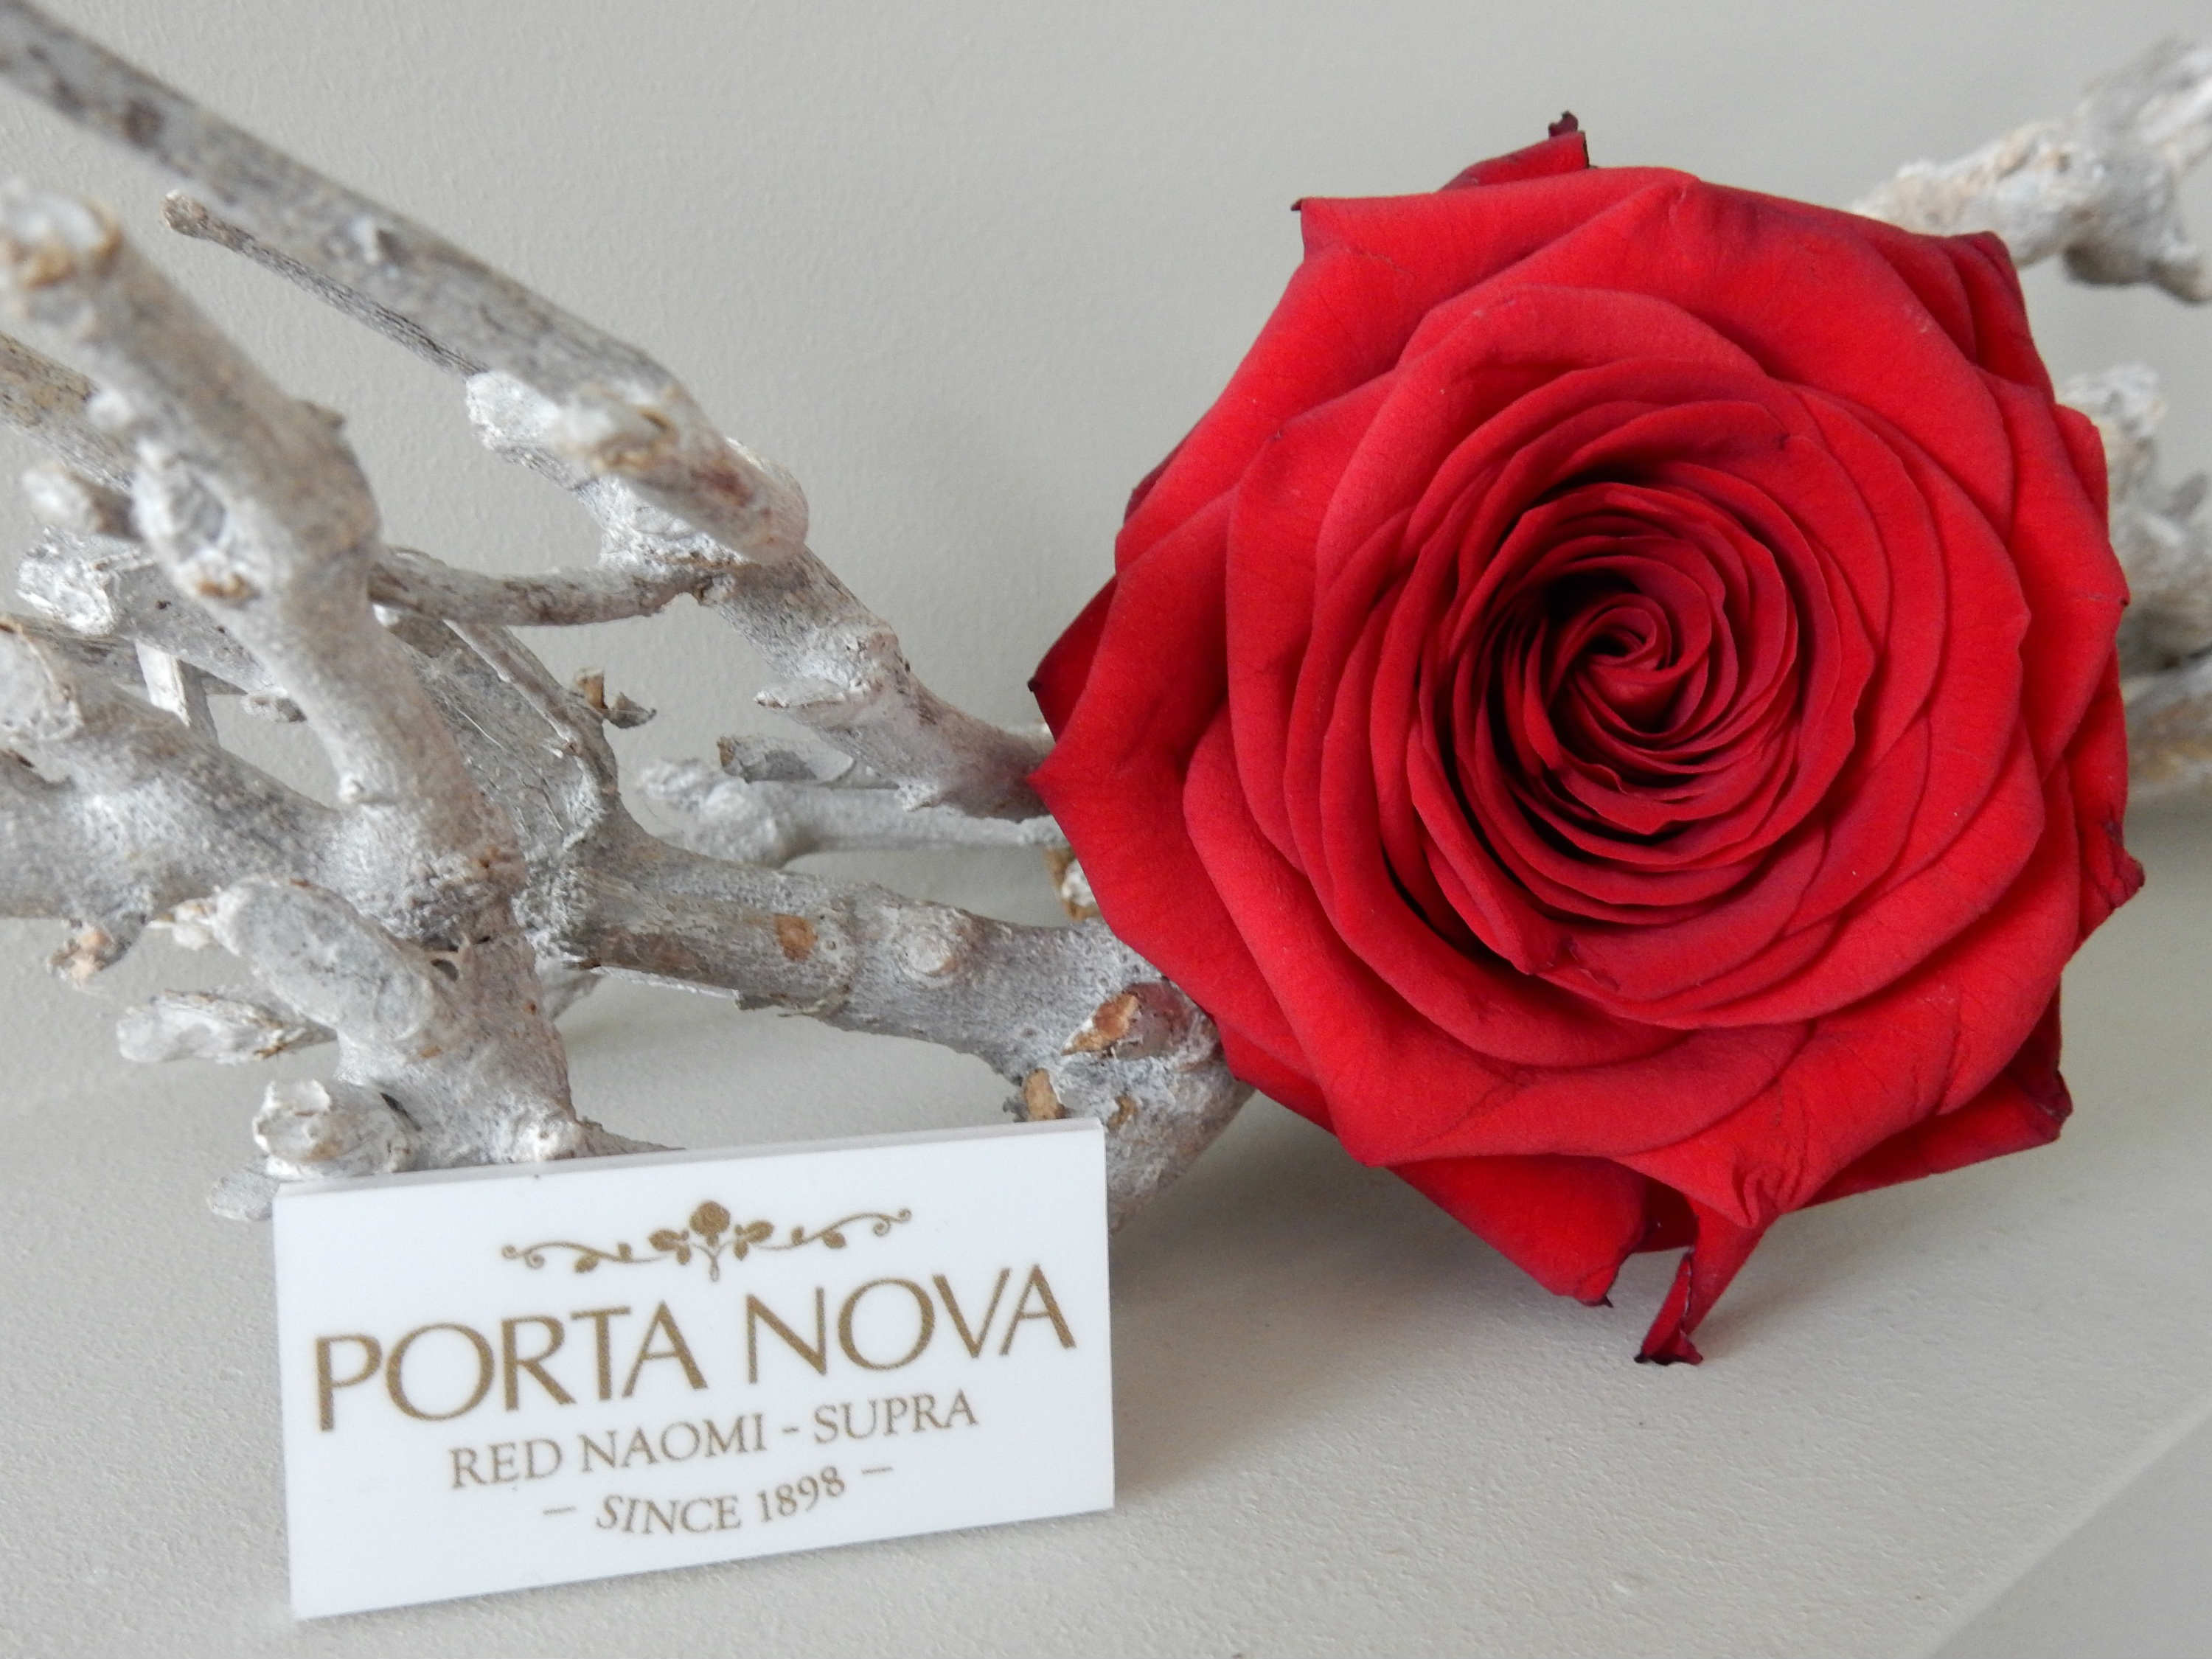 Easter table with Porta nova red naomi rose Erko